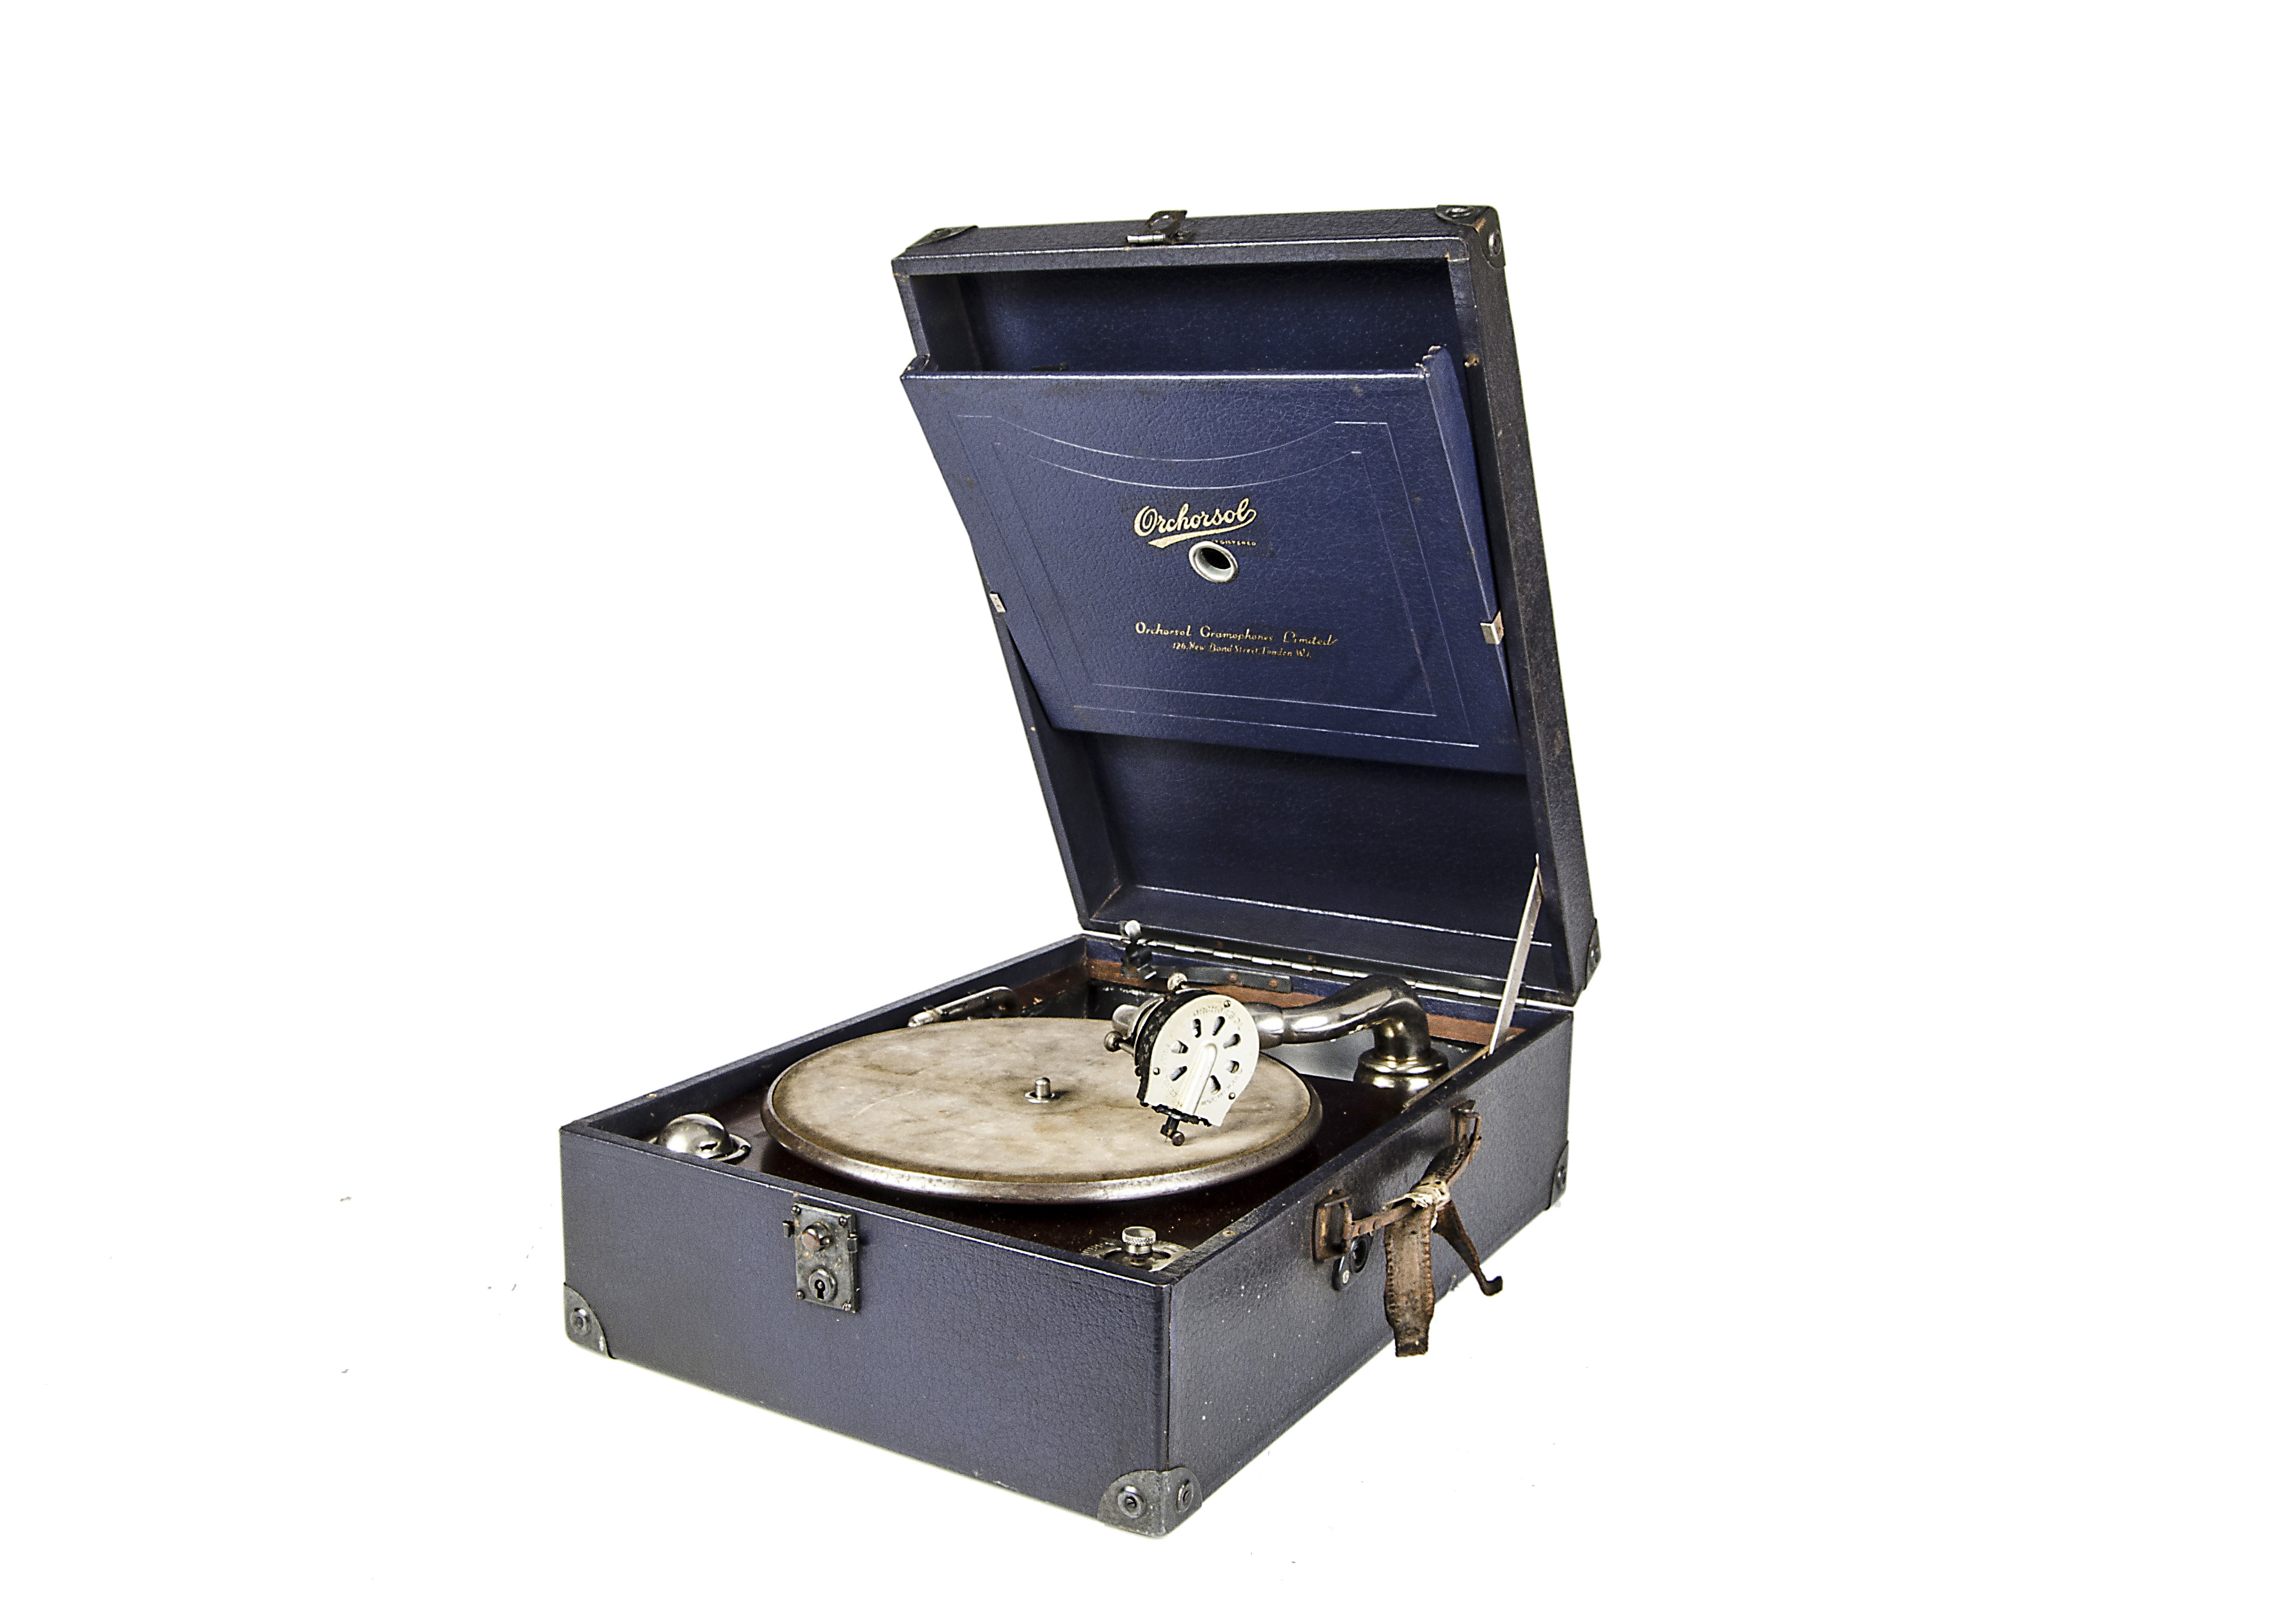 Portable gramophone: an Orchorsol portable gramophone, with Ochorsol adjustable soundbox, in blue